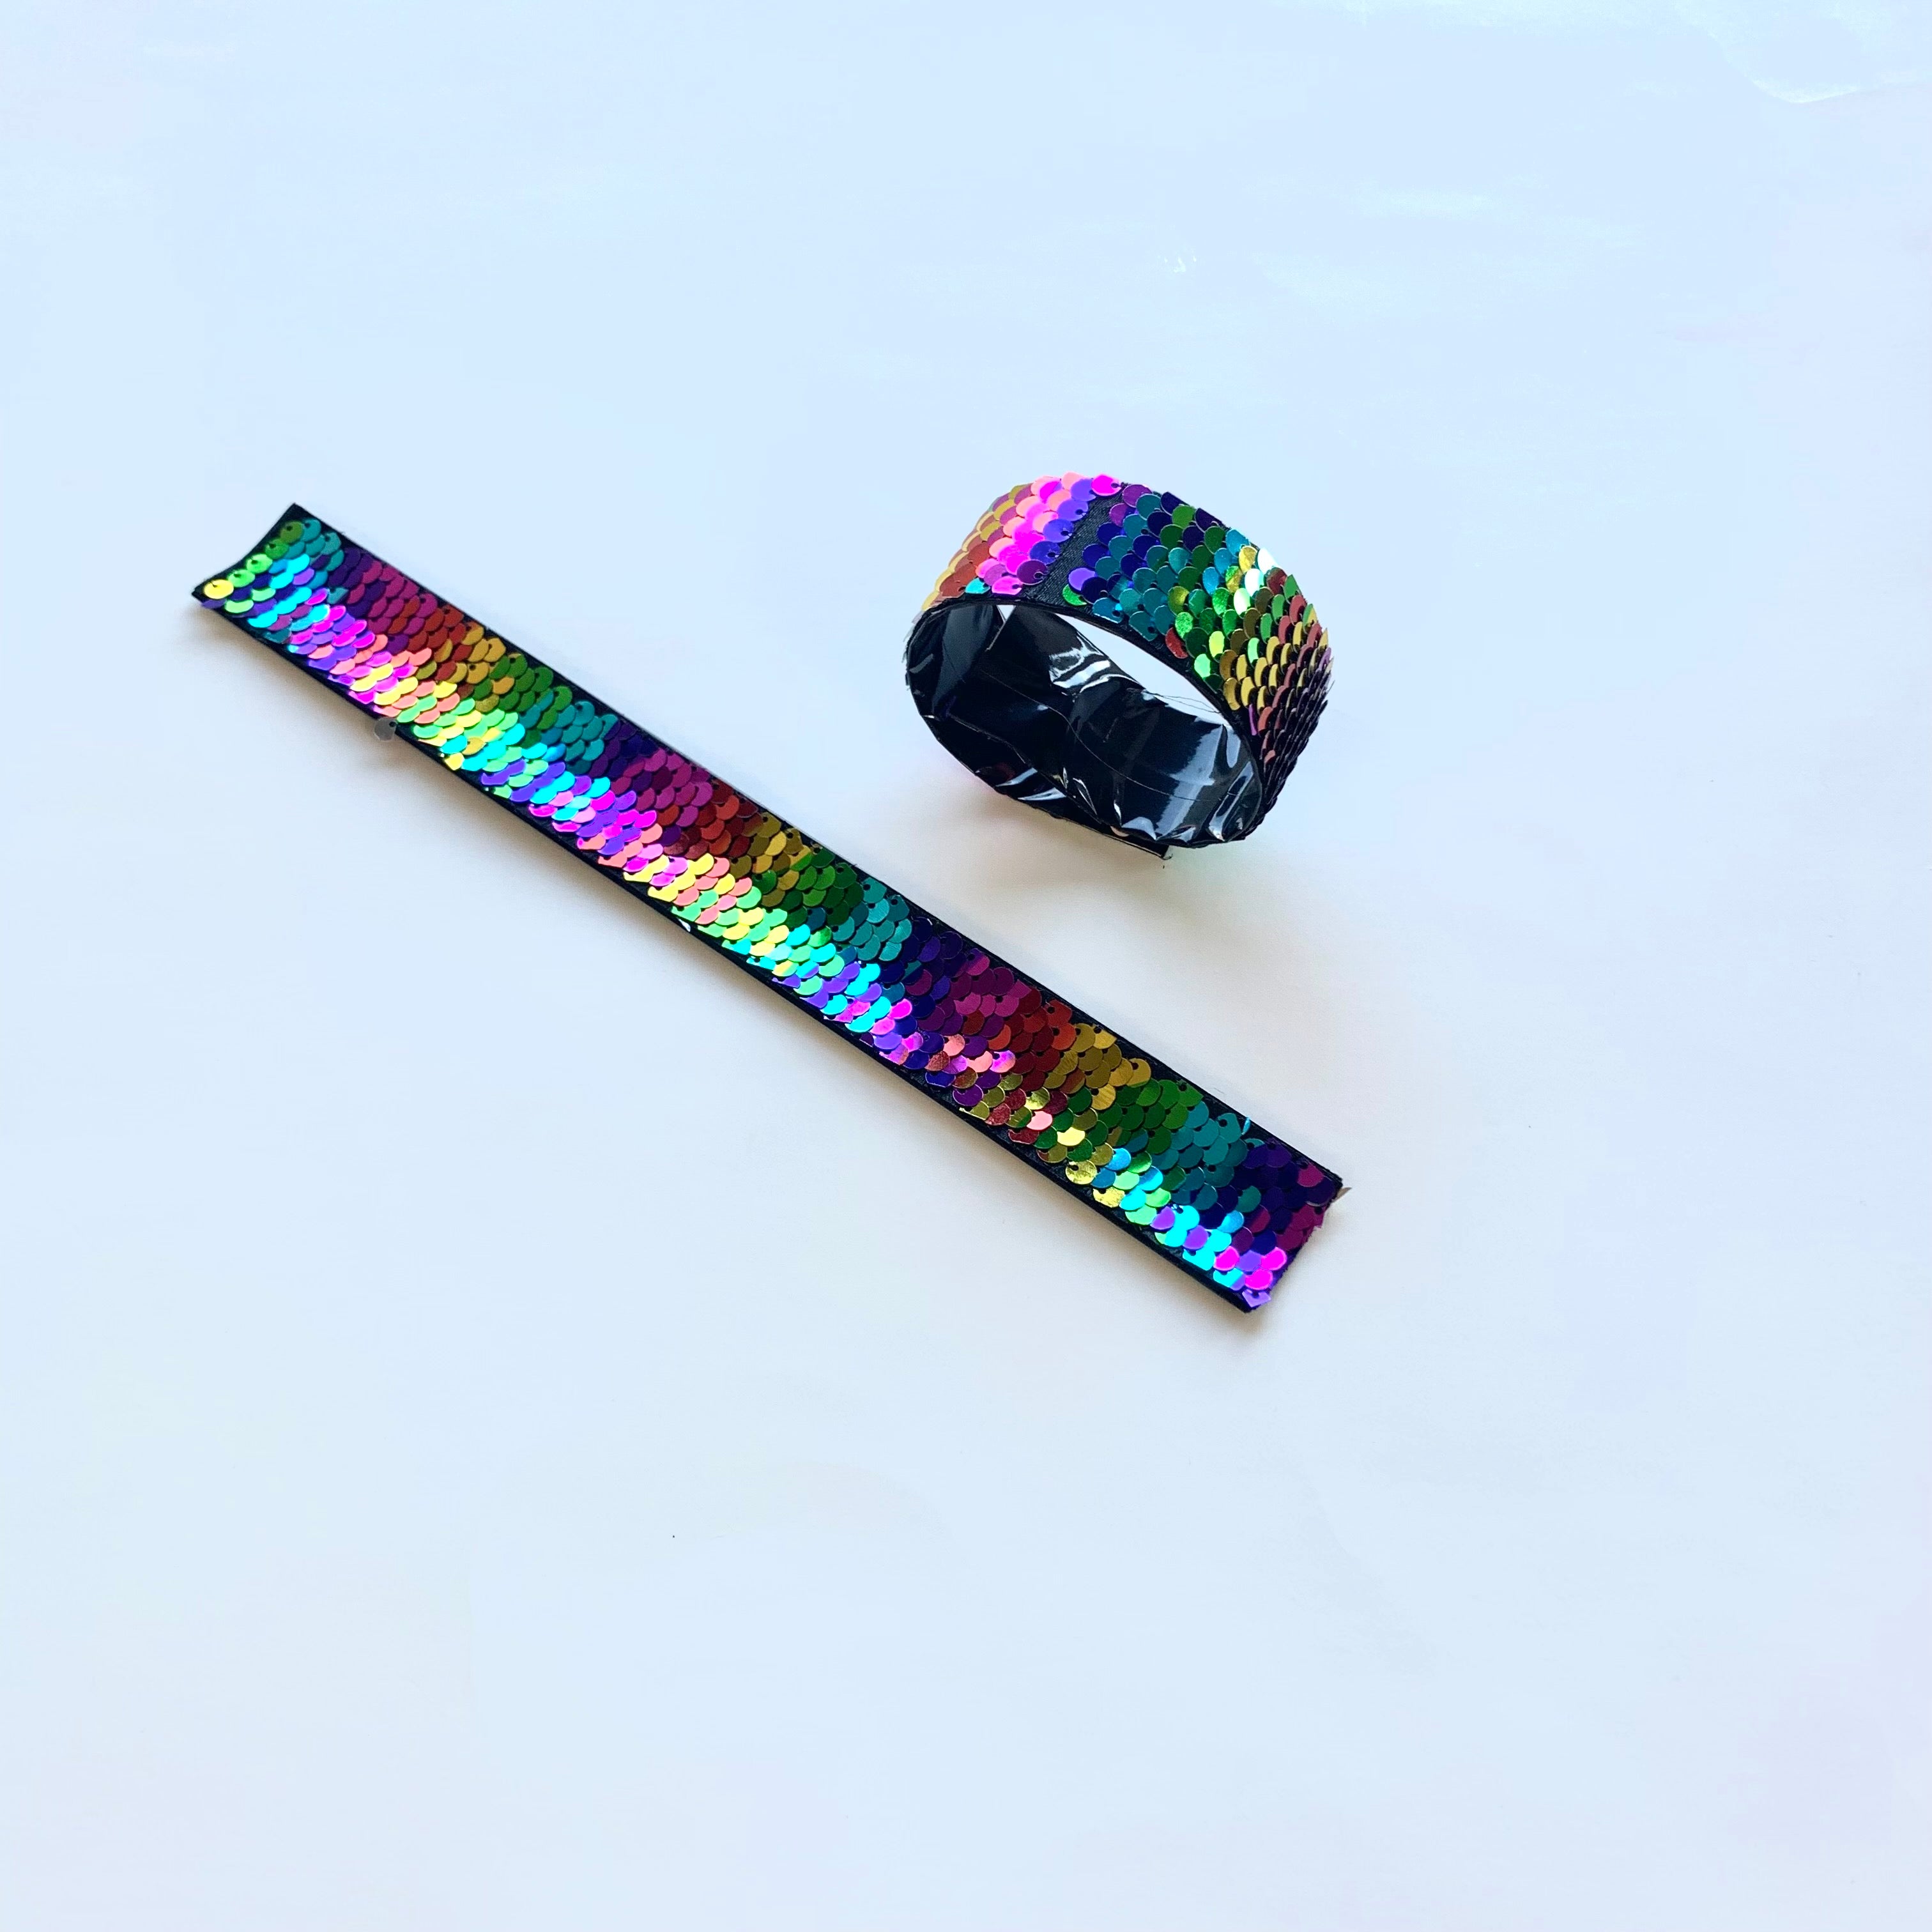 Matte White Aura Quartz Bracelet With Holographic Round Opal Beads 2021 New  Elastic Good Luck Gemstone Braceslet From Toponewholesaler, $1.79 |  DHgate.Com